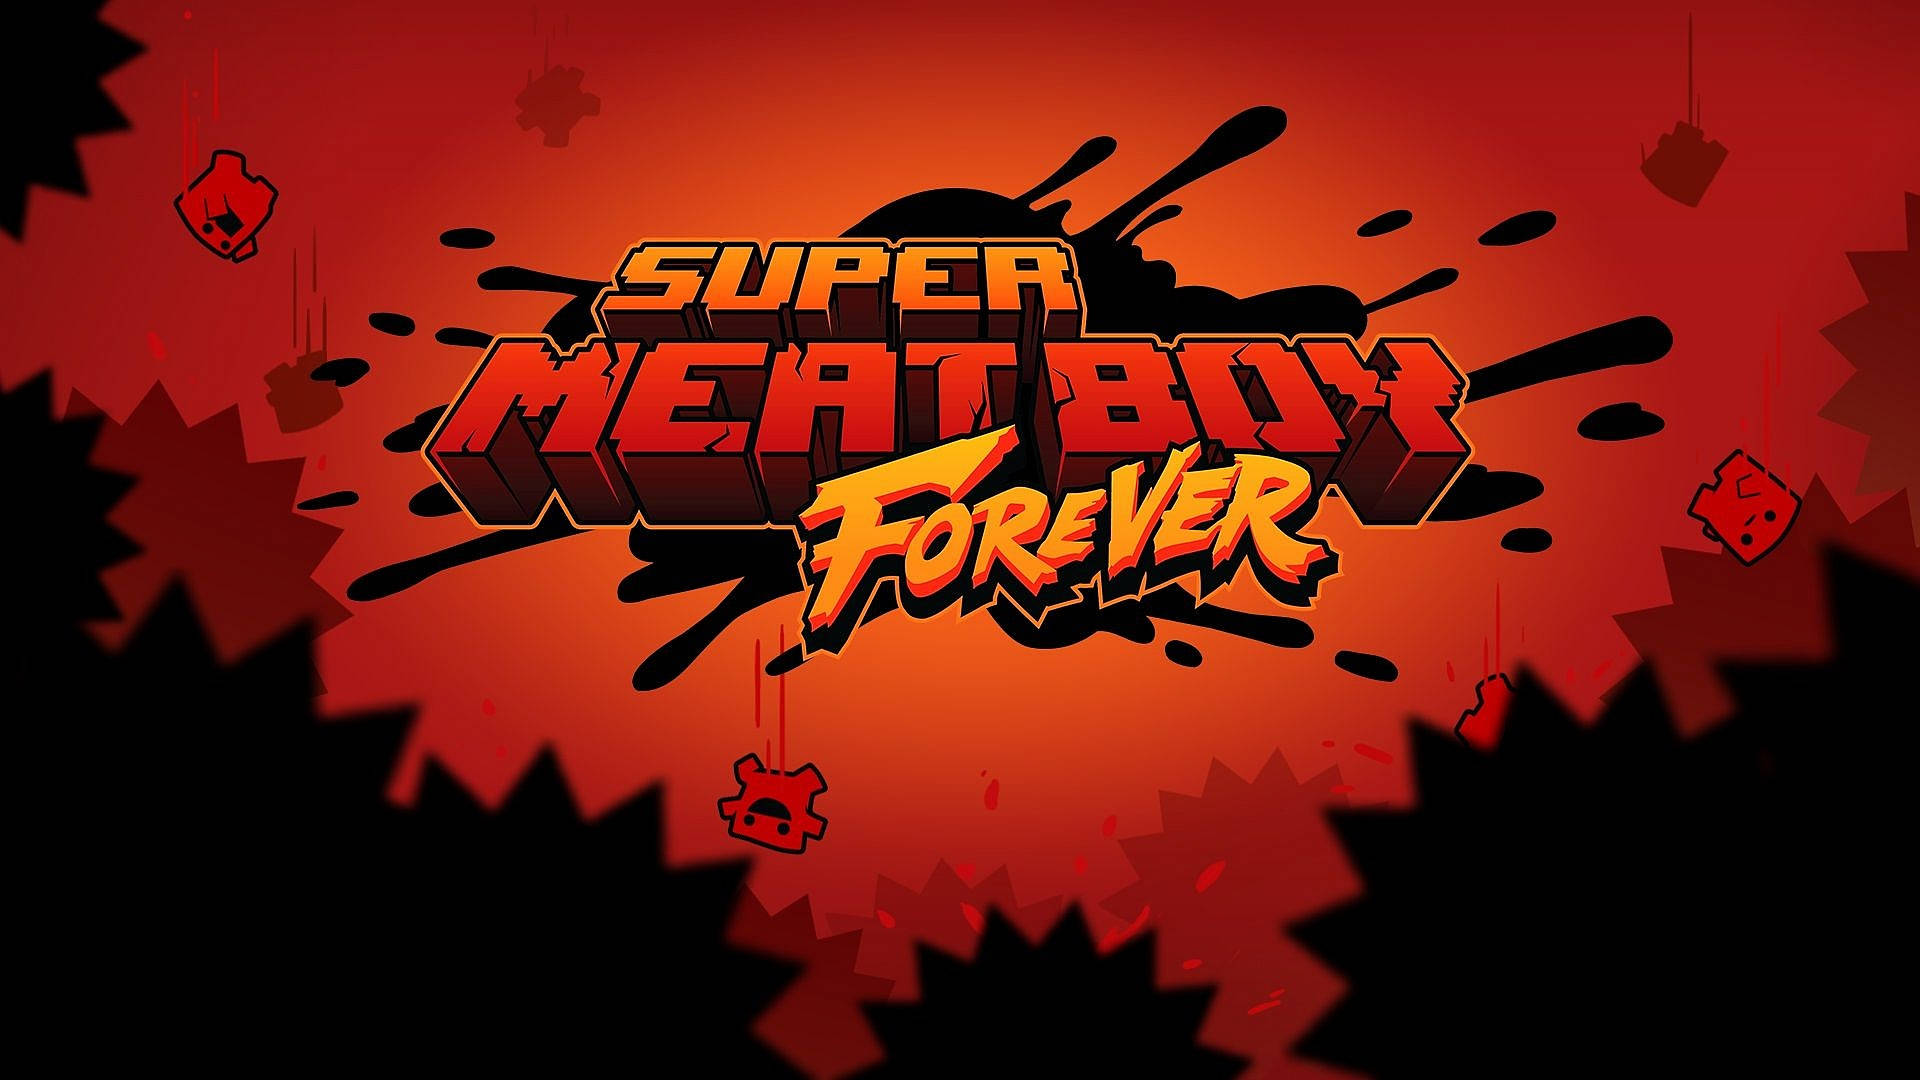 High-octane Action In Super Meat Boy Forever